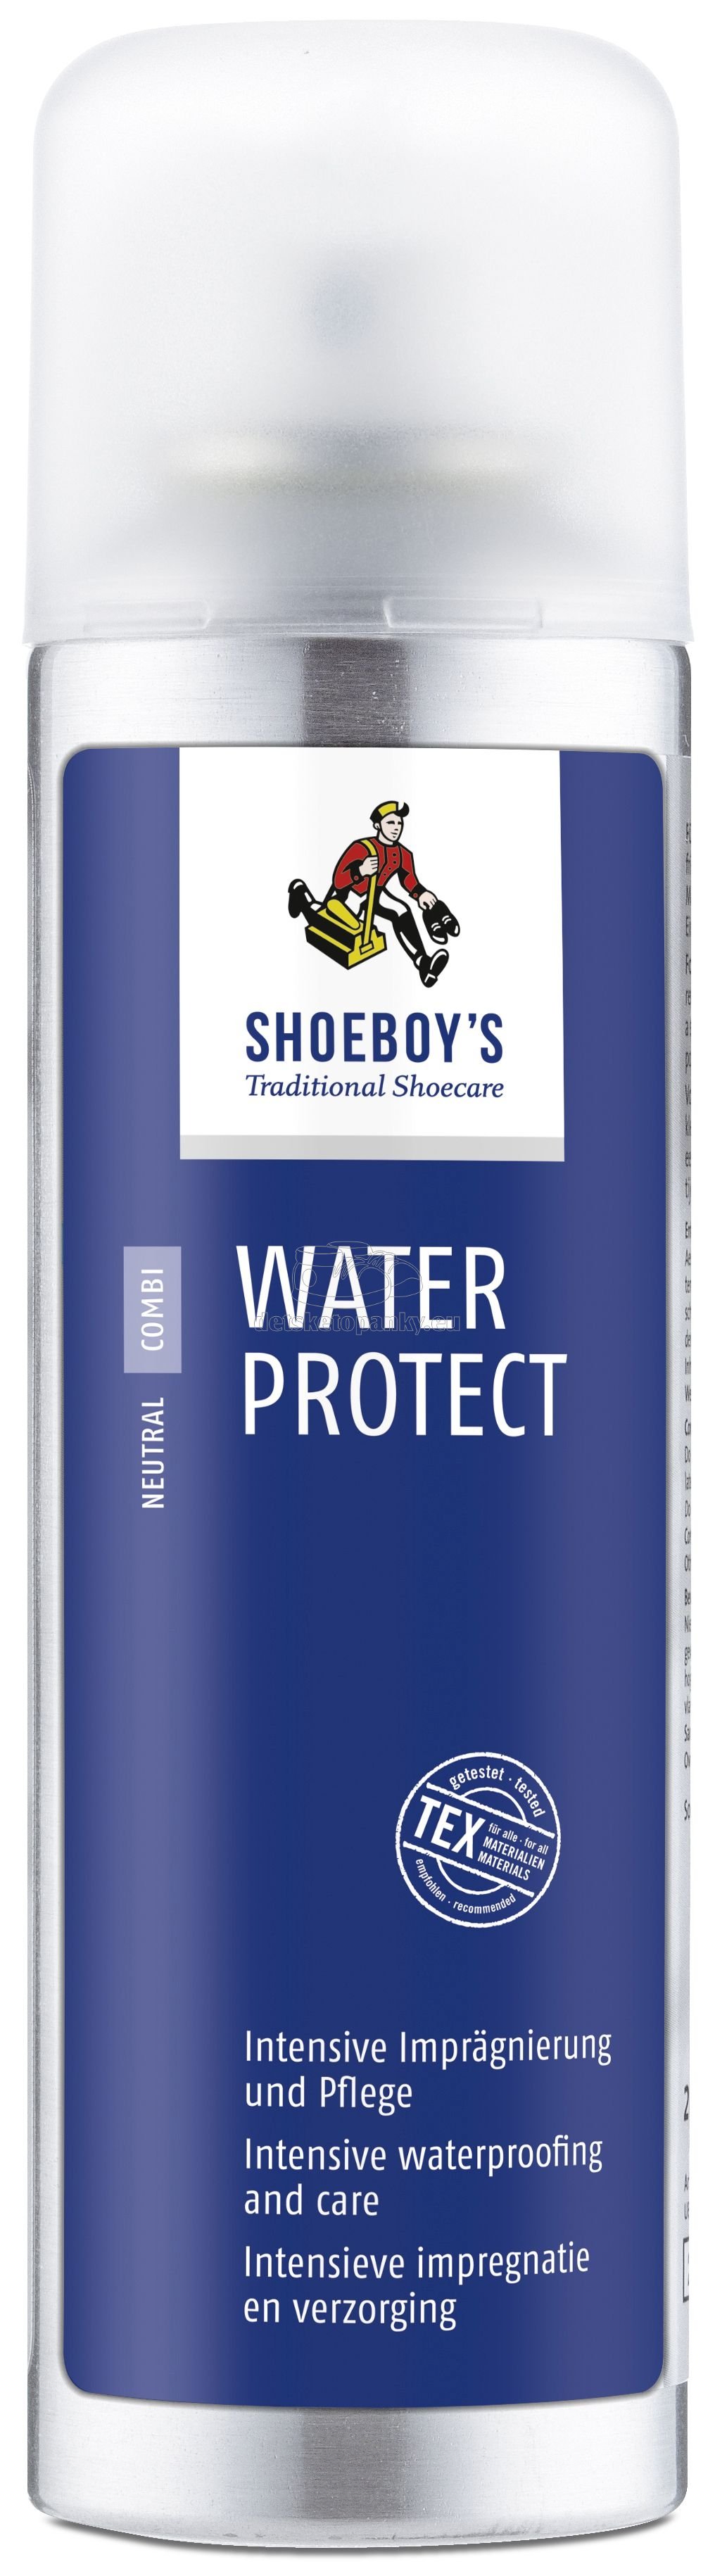 Shoeboy's impregnacia Water protect 200 ml s výživou